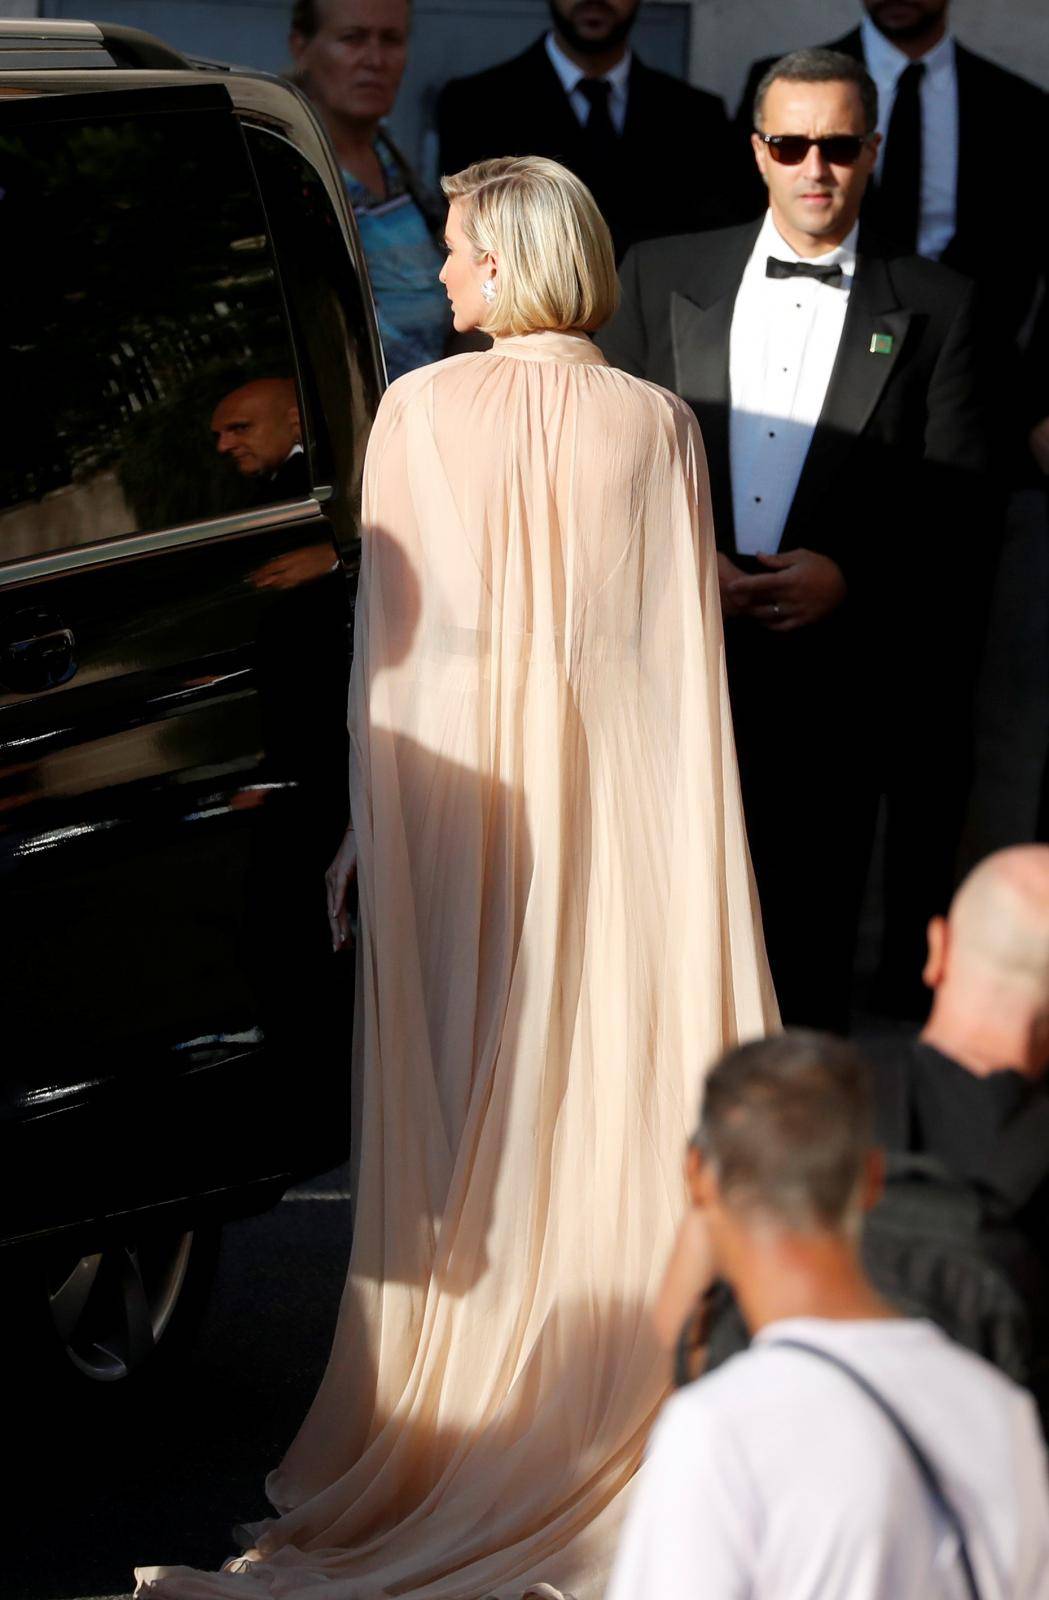 Ivanka Trump arrives to attend the wedding of fashion designer Misha Nonoo at Villa Aurelia in Rome